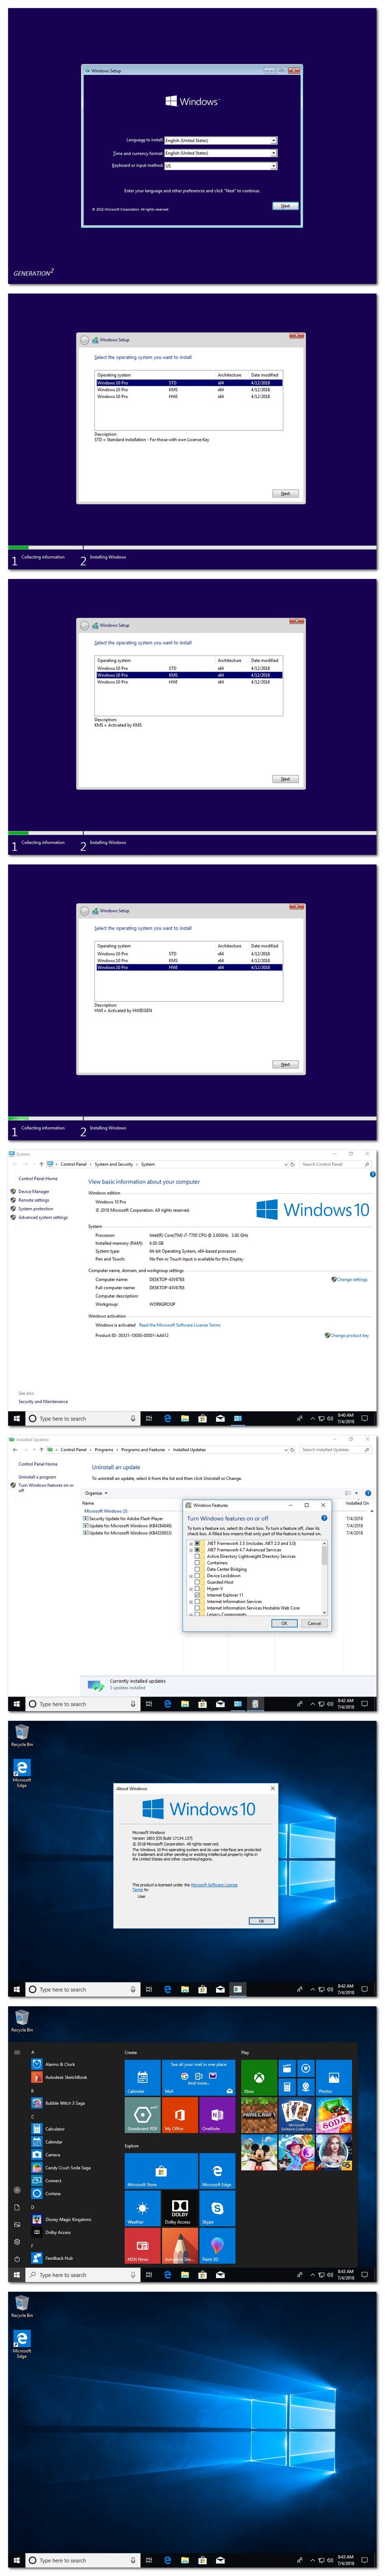 windows 10 build 1803 download